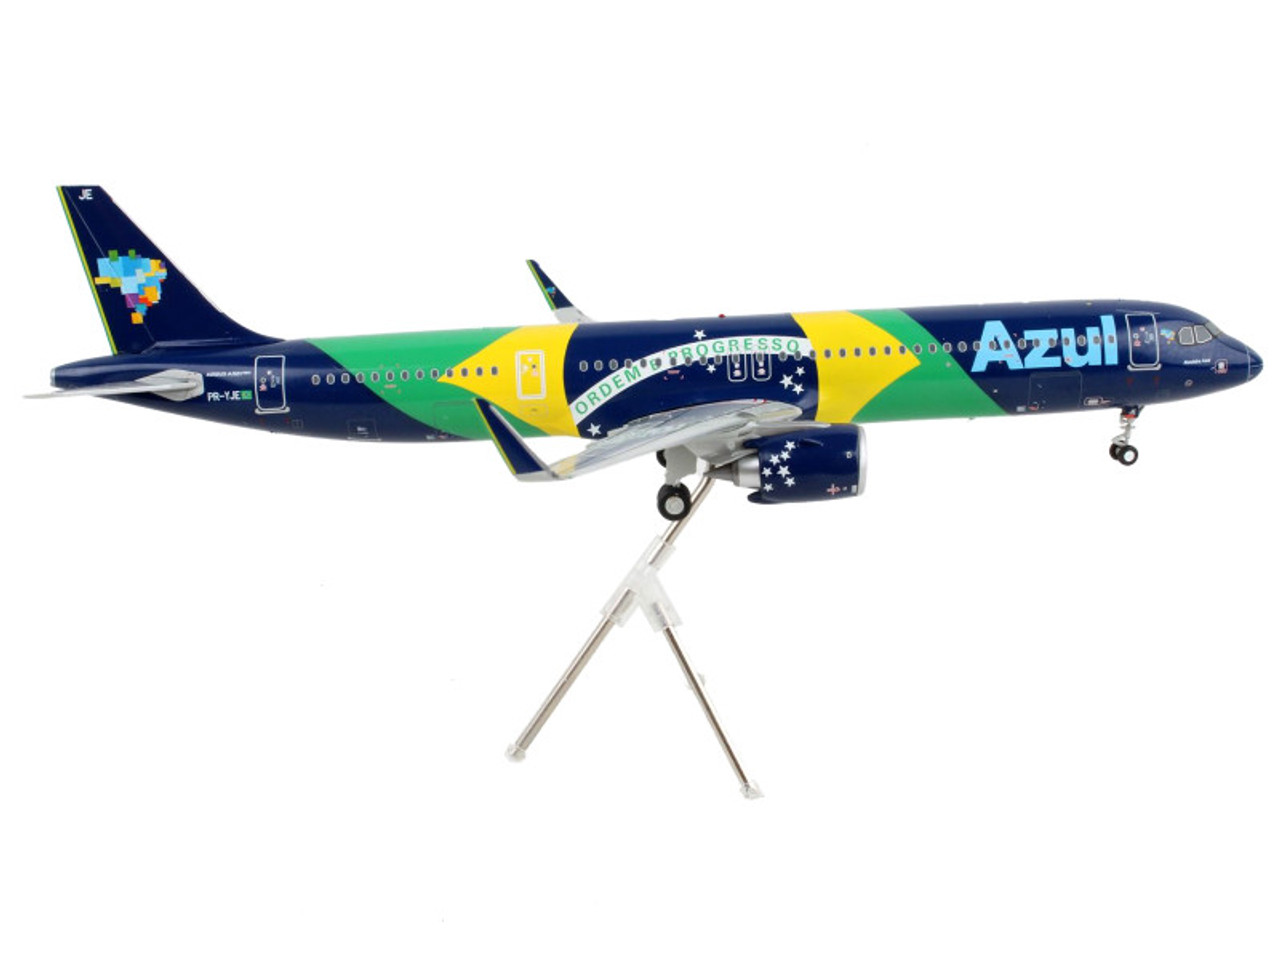 Airbus A321neo Commercial Aircraft "Azul Linhas Aereas" Dark Blue Brazil Flag Livery "Gemini 200" Series 1/200 Diecast Model Airplane by GeminiJets